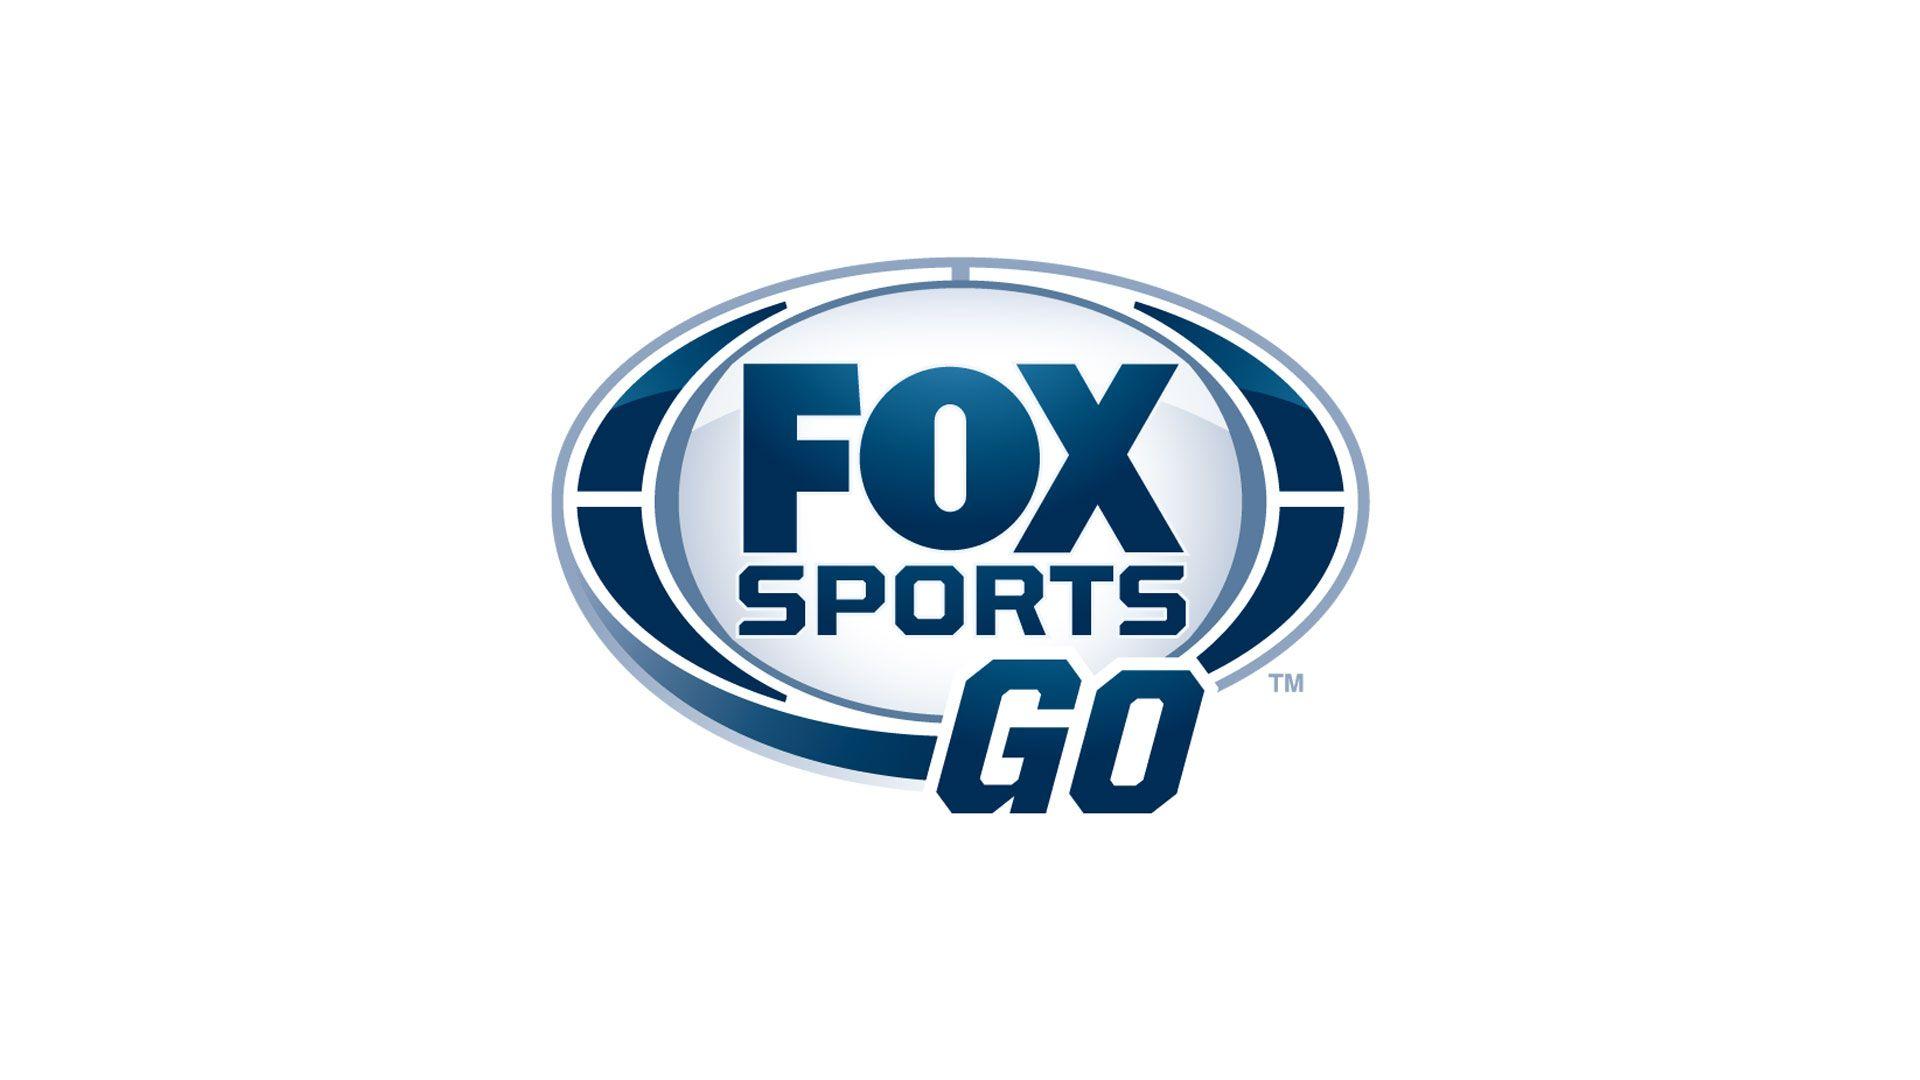 Fox Sports Logo - Photos & Logos | Fox Sports PressPass